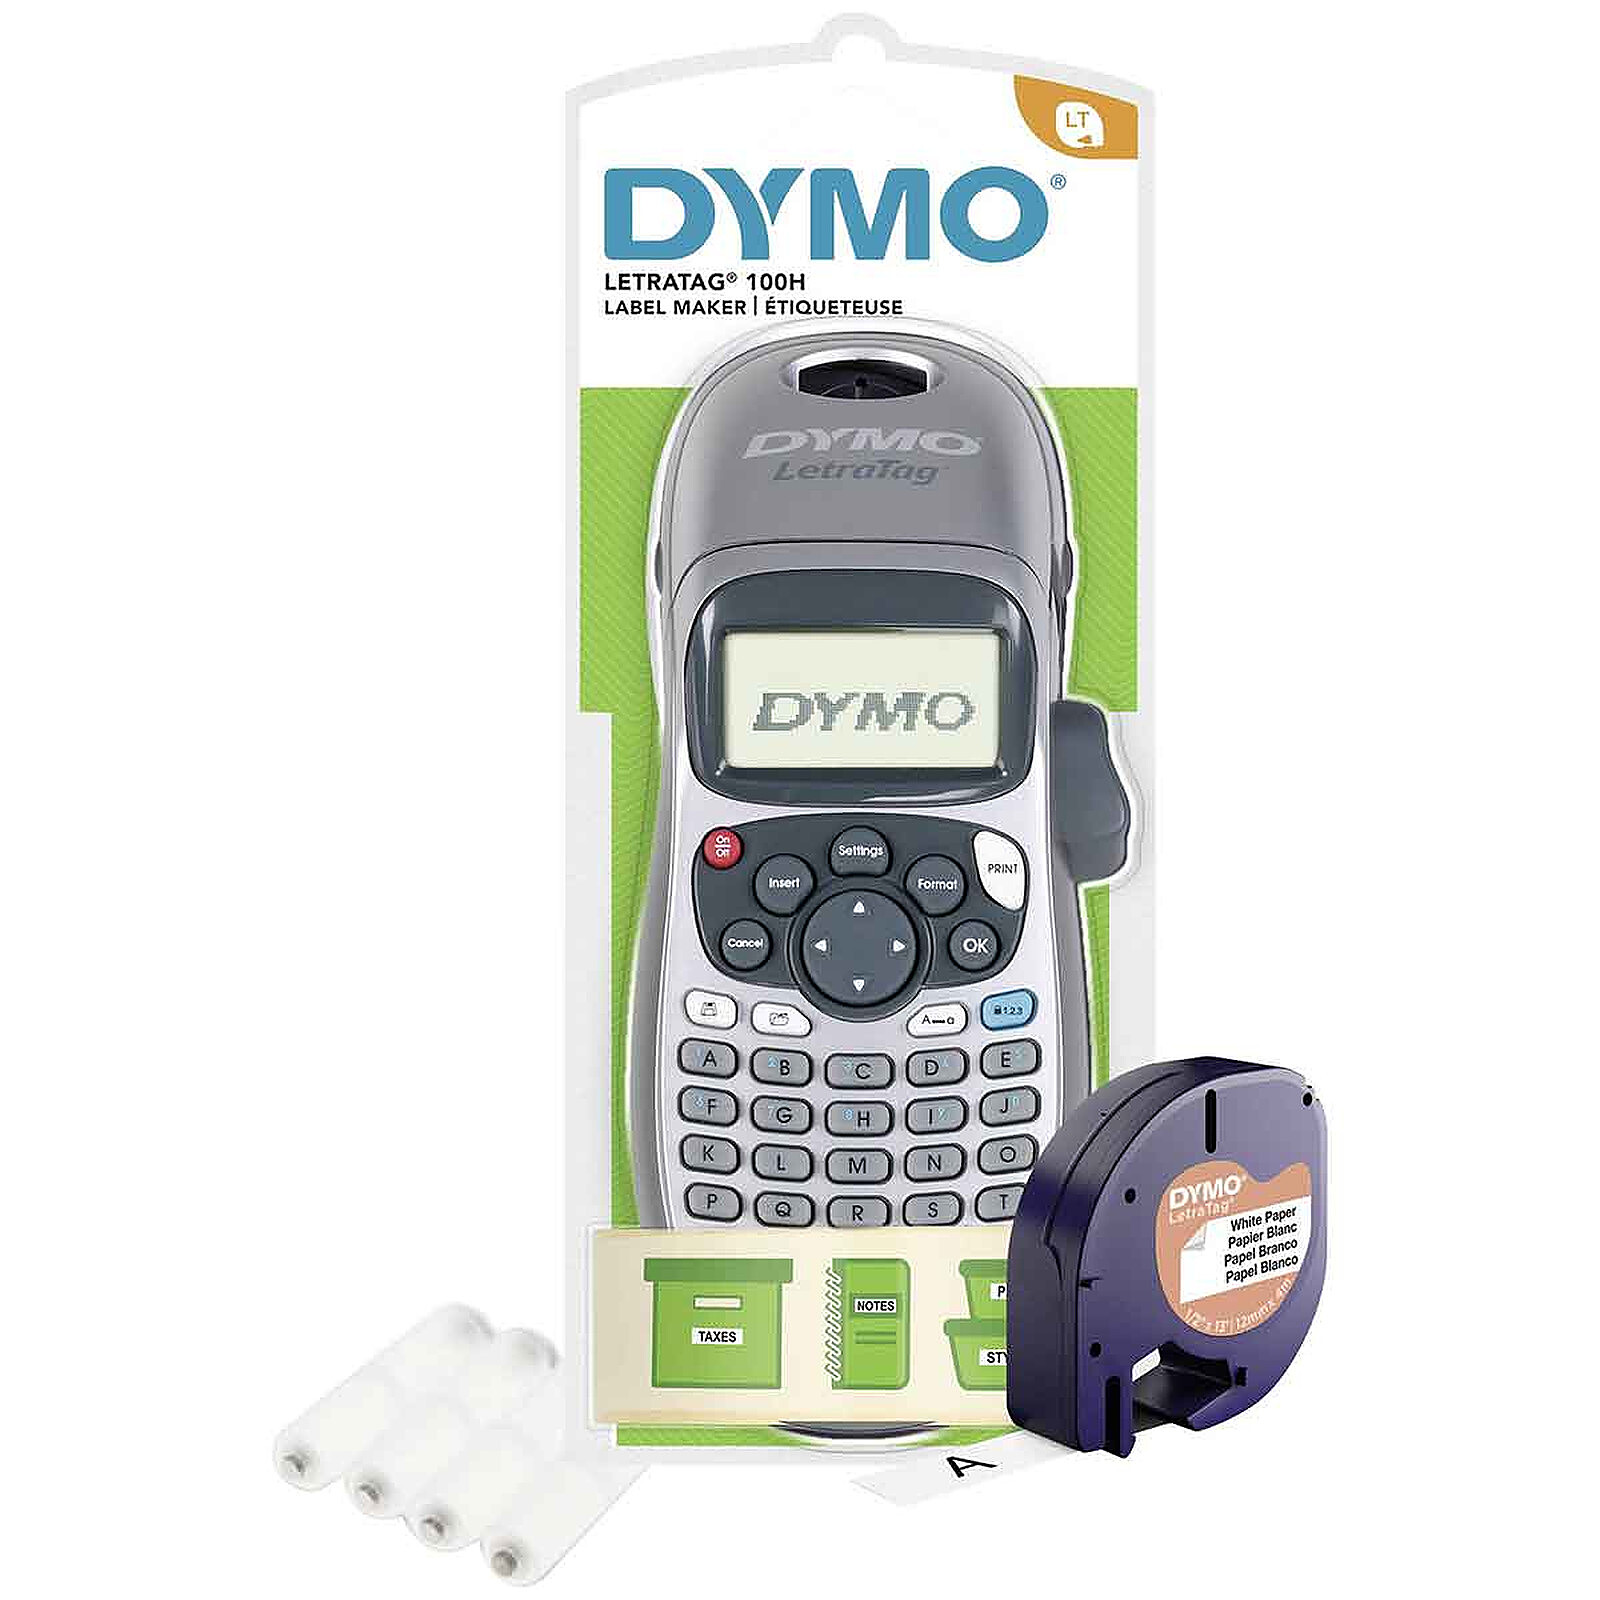 DYMO LetraTag Plus LT-100H Silver - Label maker - LDLC 3-year warranty